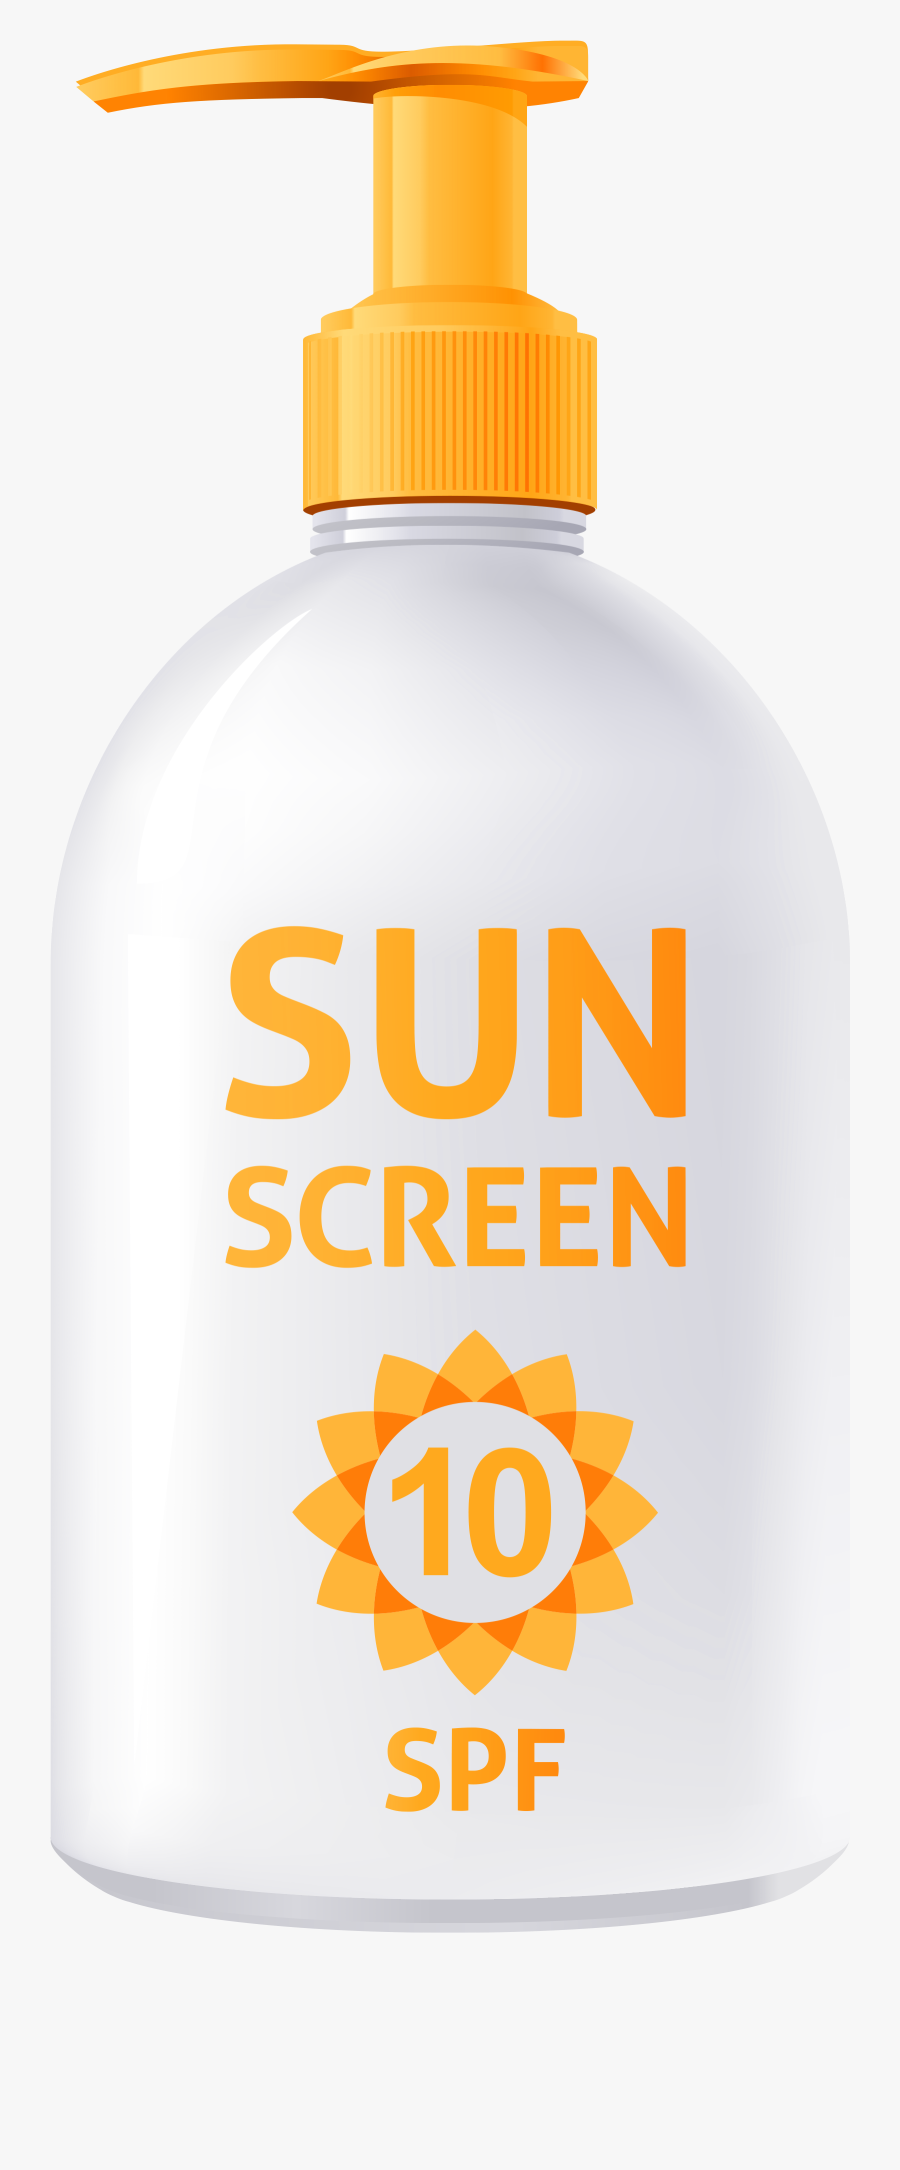 Transparent Background Sunscreen Transparent, Transparent Clipart